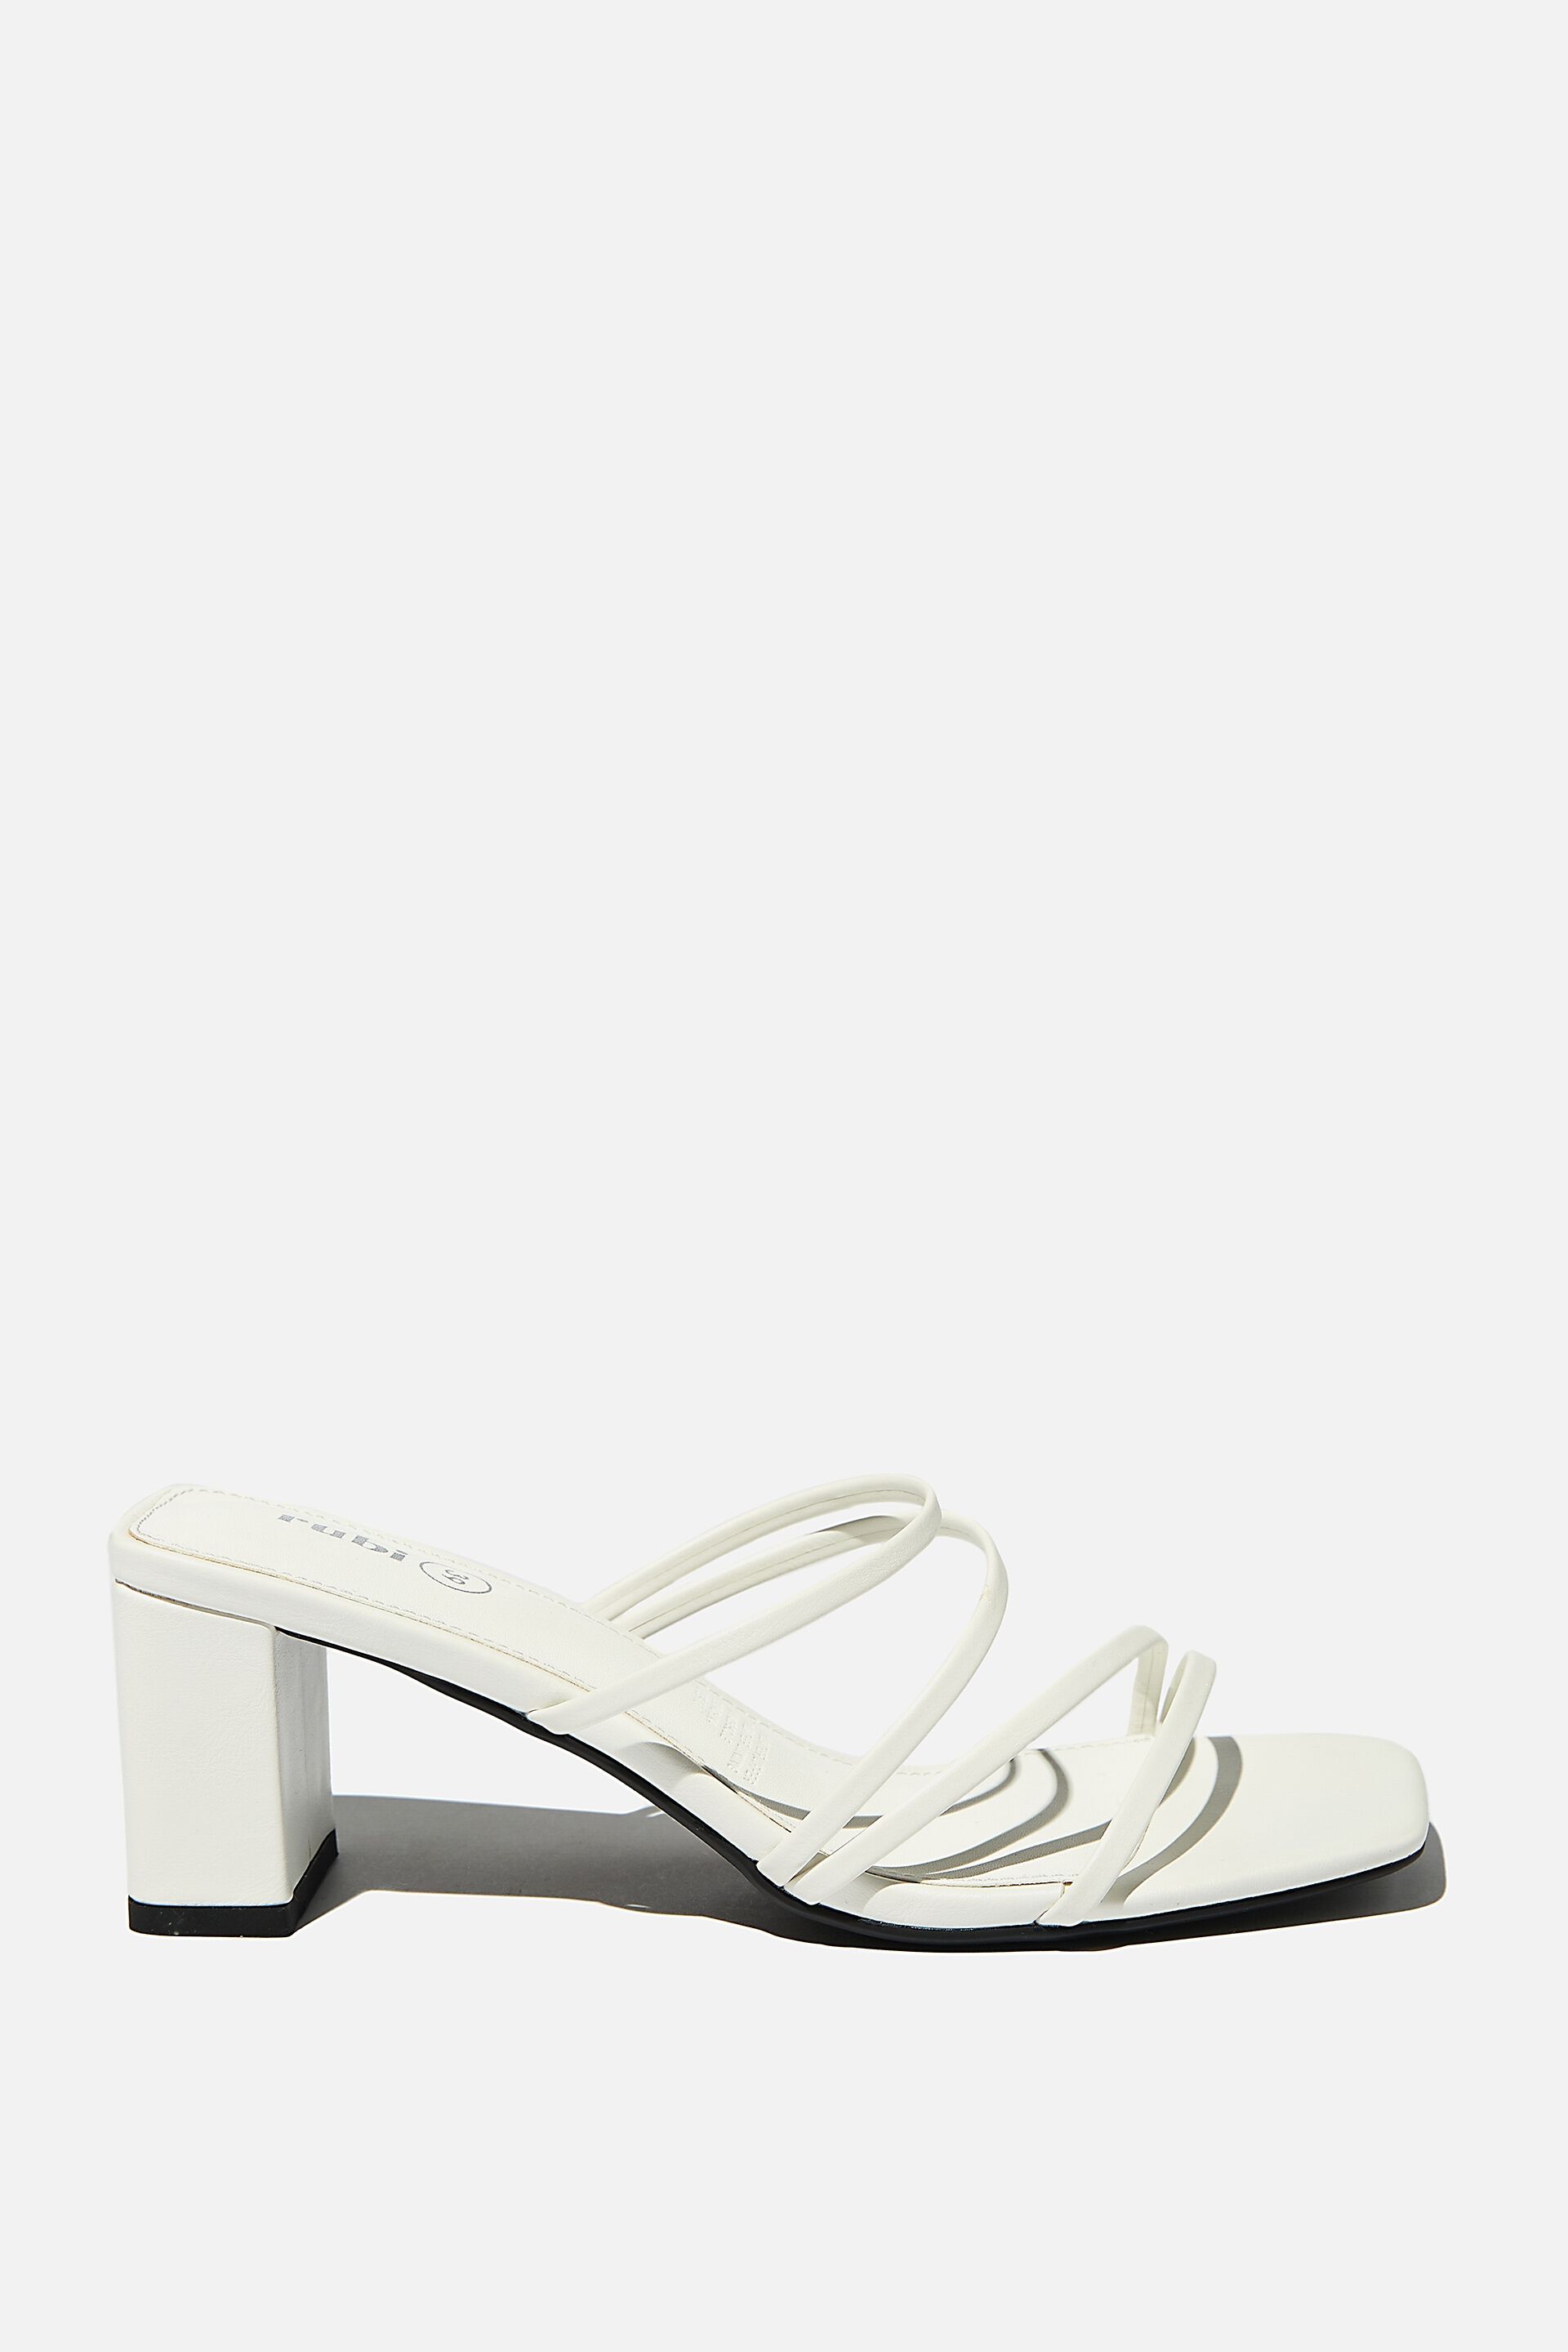 black and white sandal heels